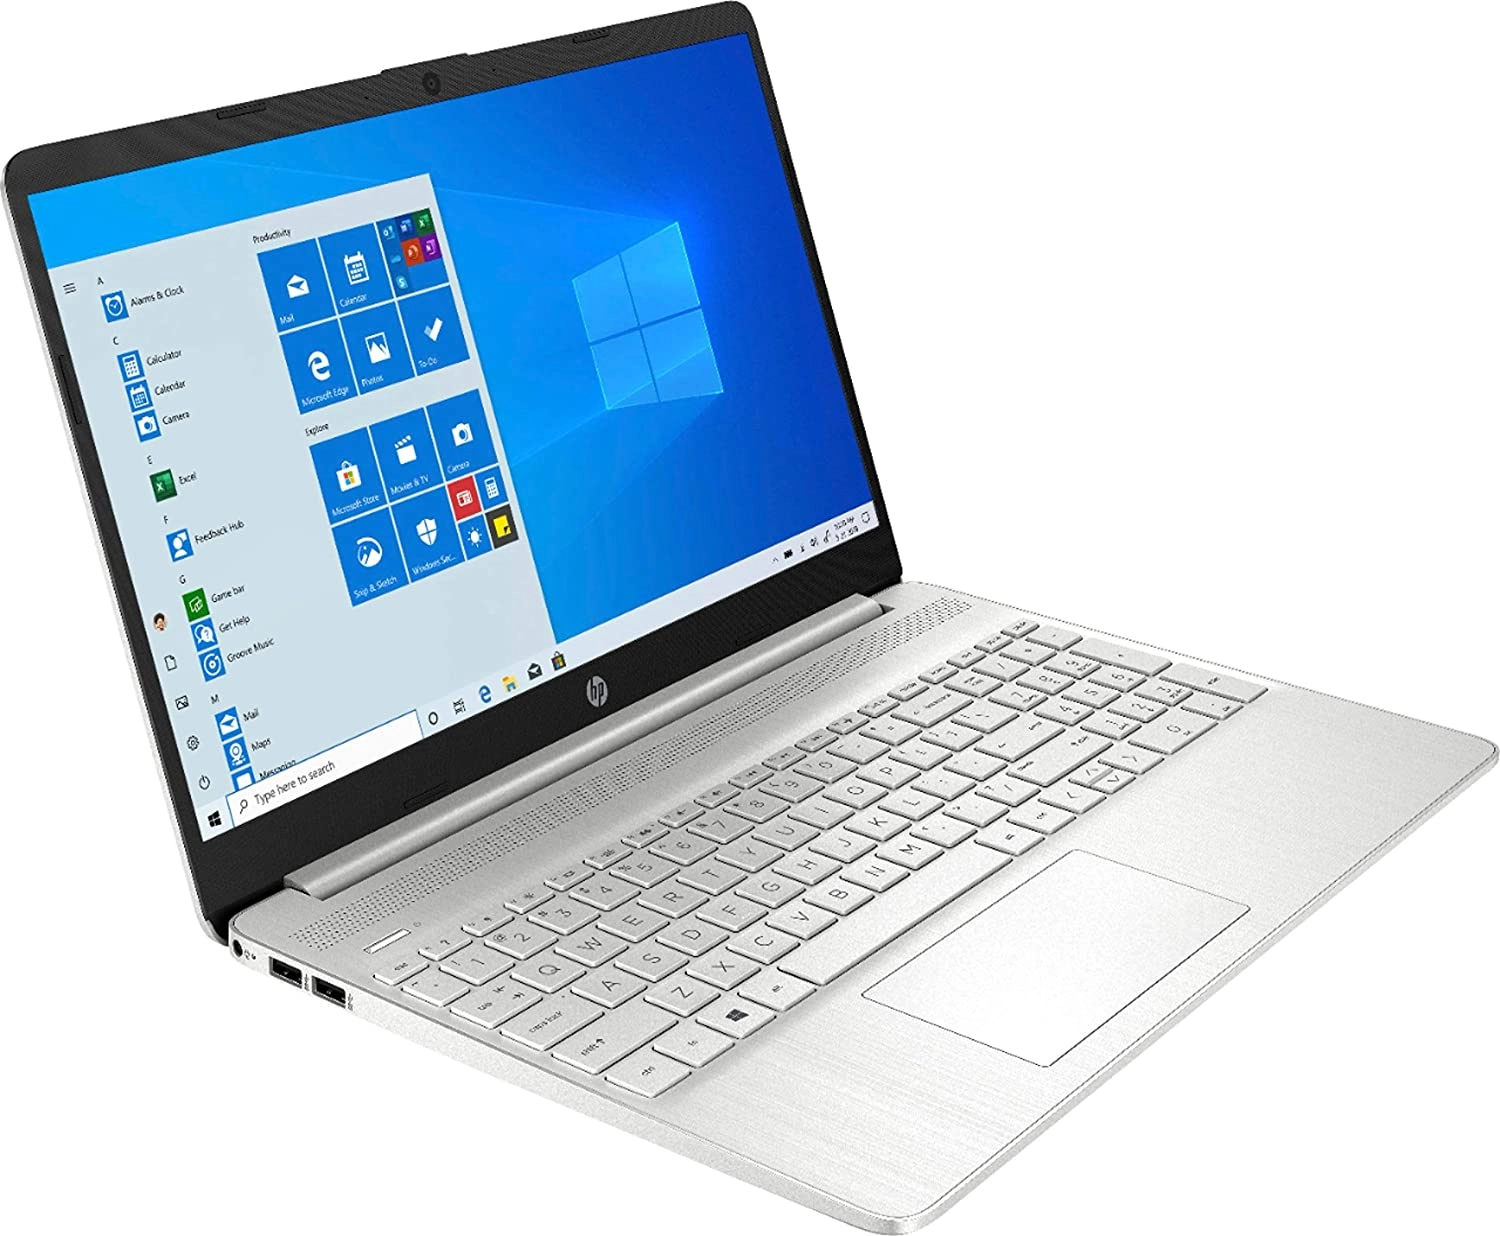 HP 15-dy1043dx laptop image